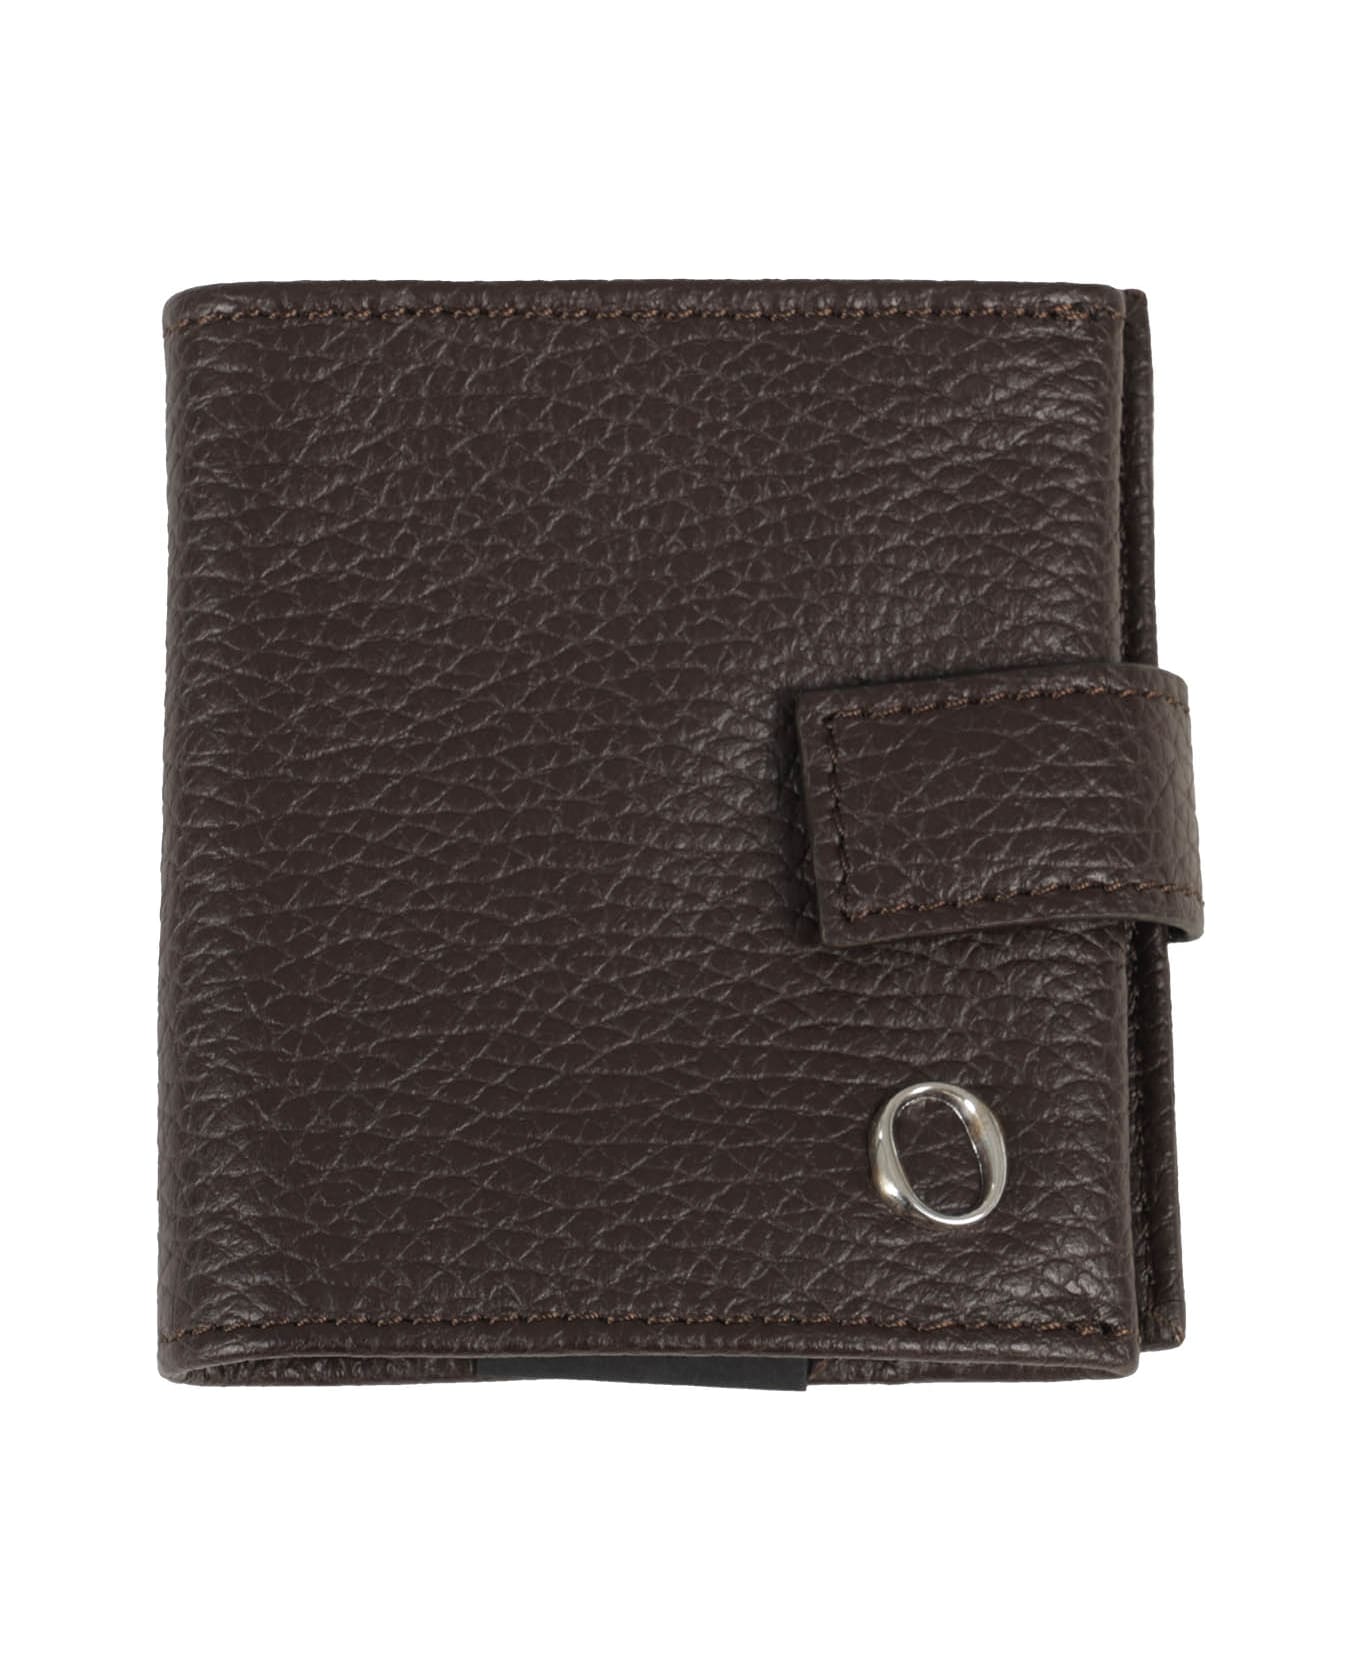 Orciani Leather Wallet - Eba Ebano